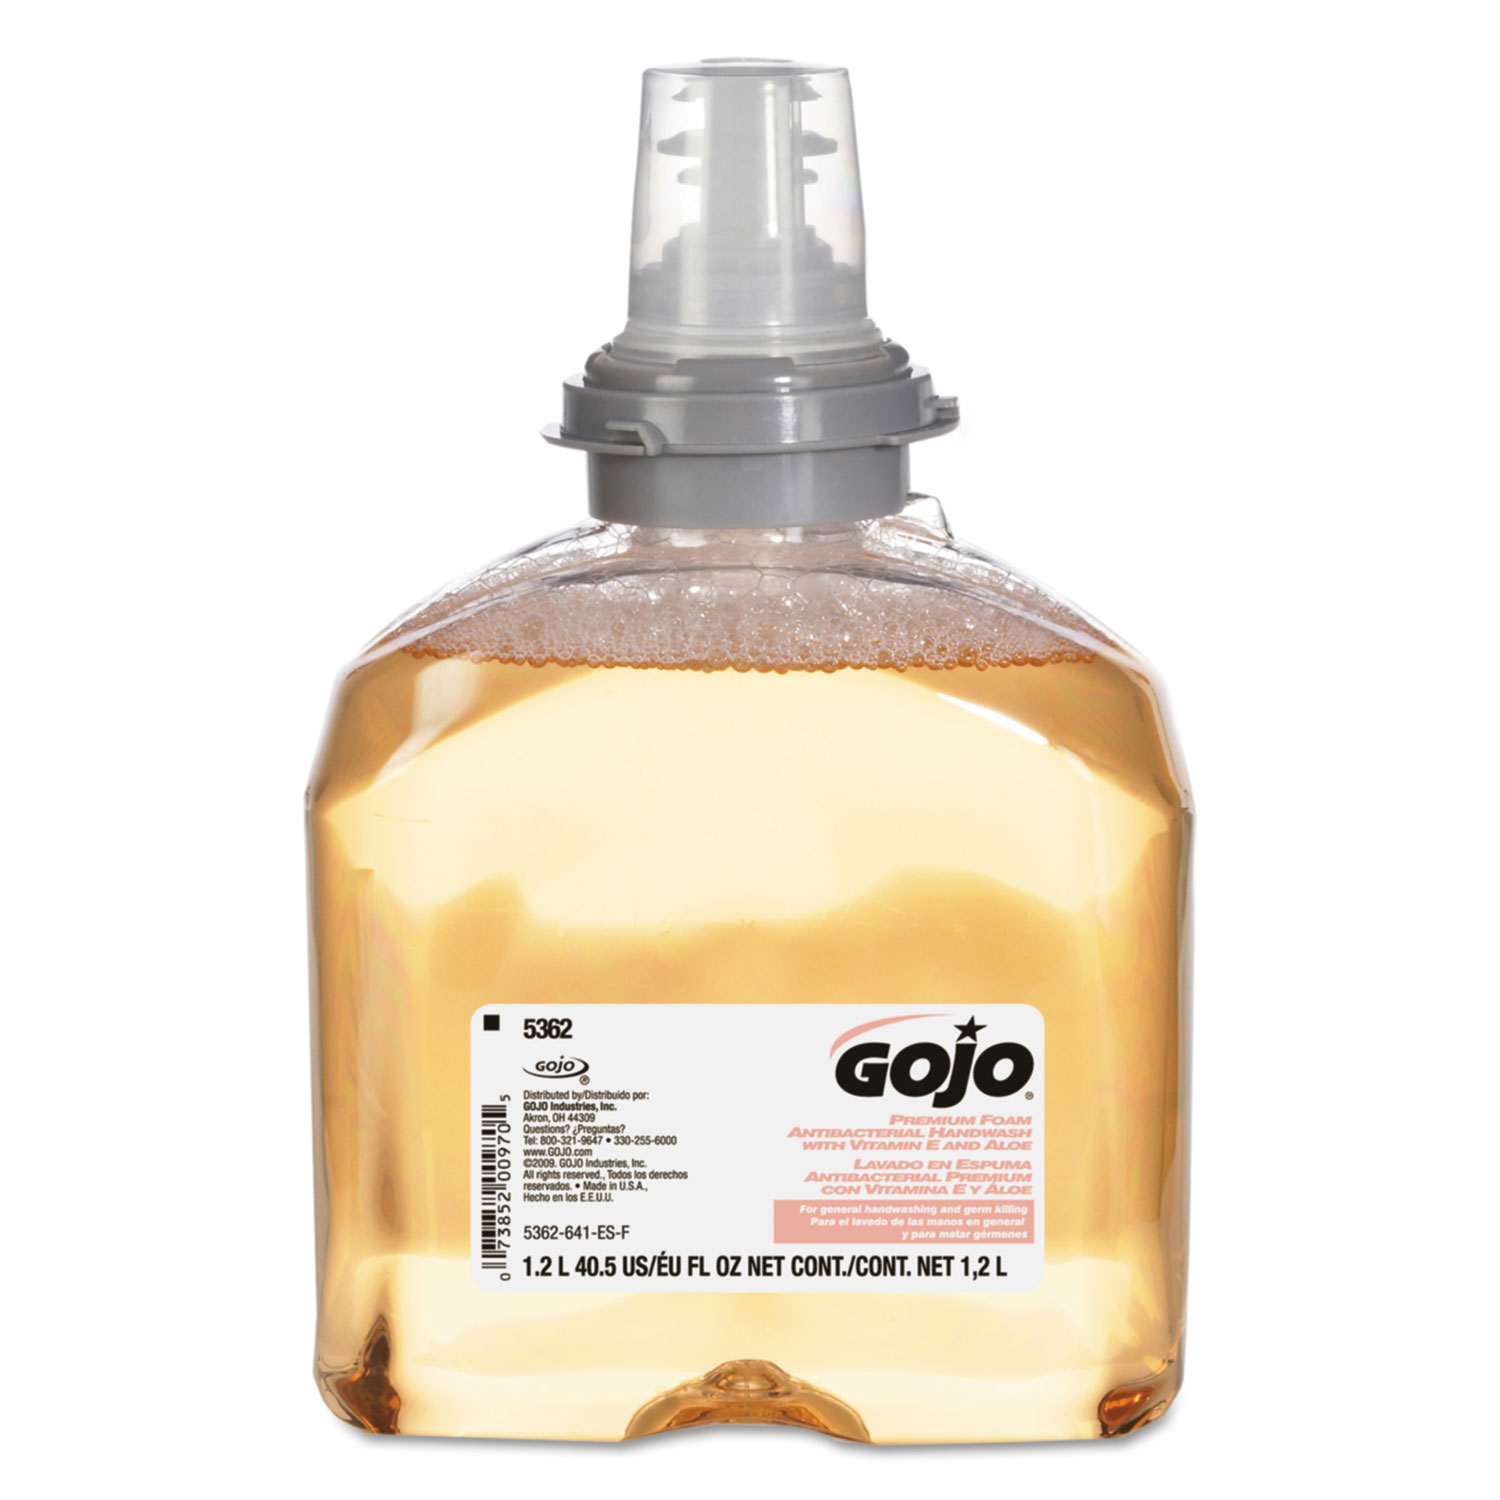  GOJO 5362-02 Premium Foam Antibacterial Hand Wash, Fresh Fruit Scent, 1200mL, 2/Carton (GOJ536202) 